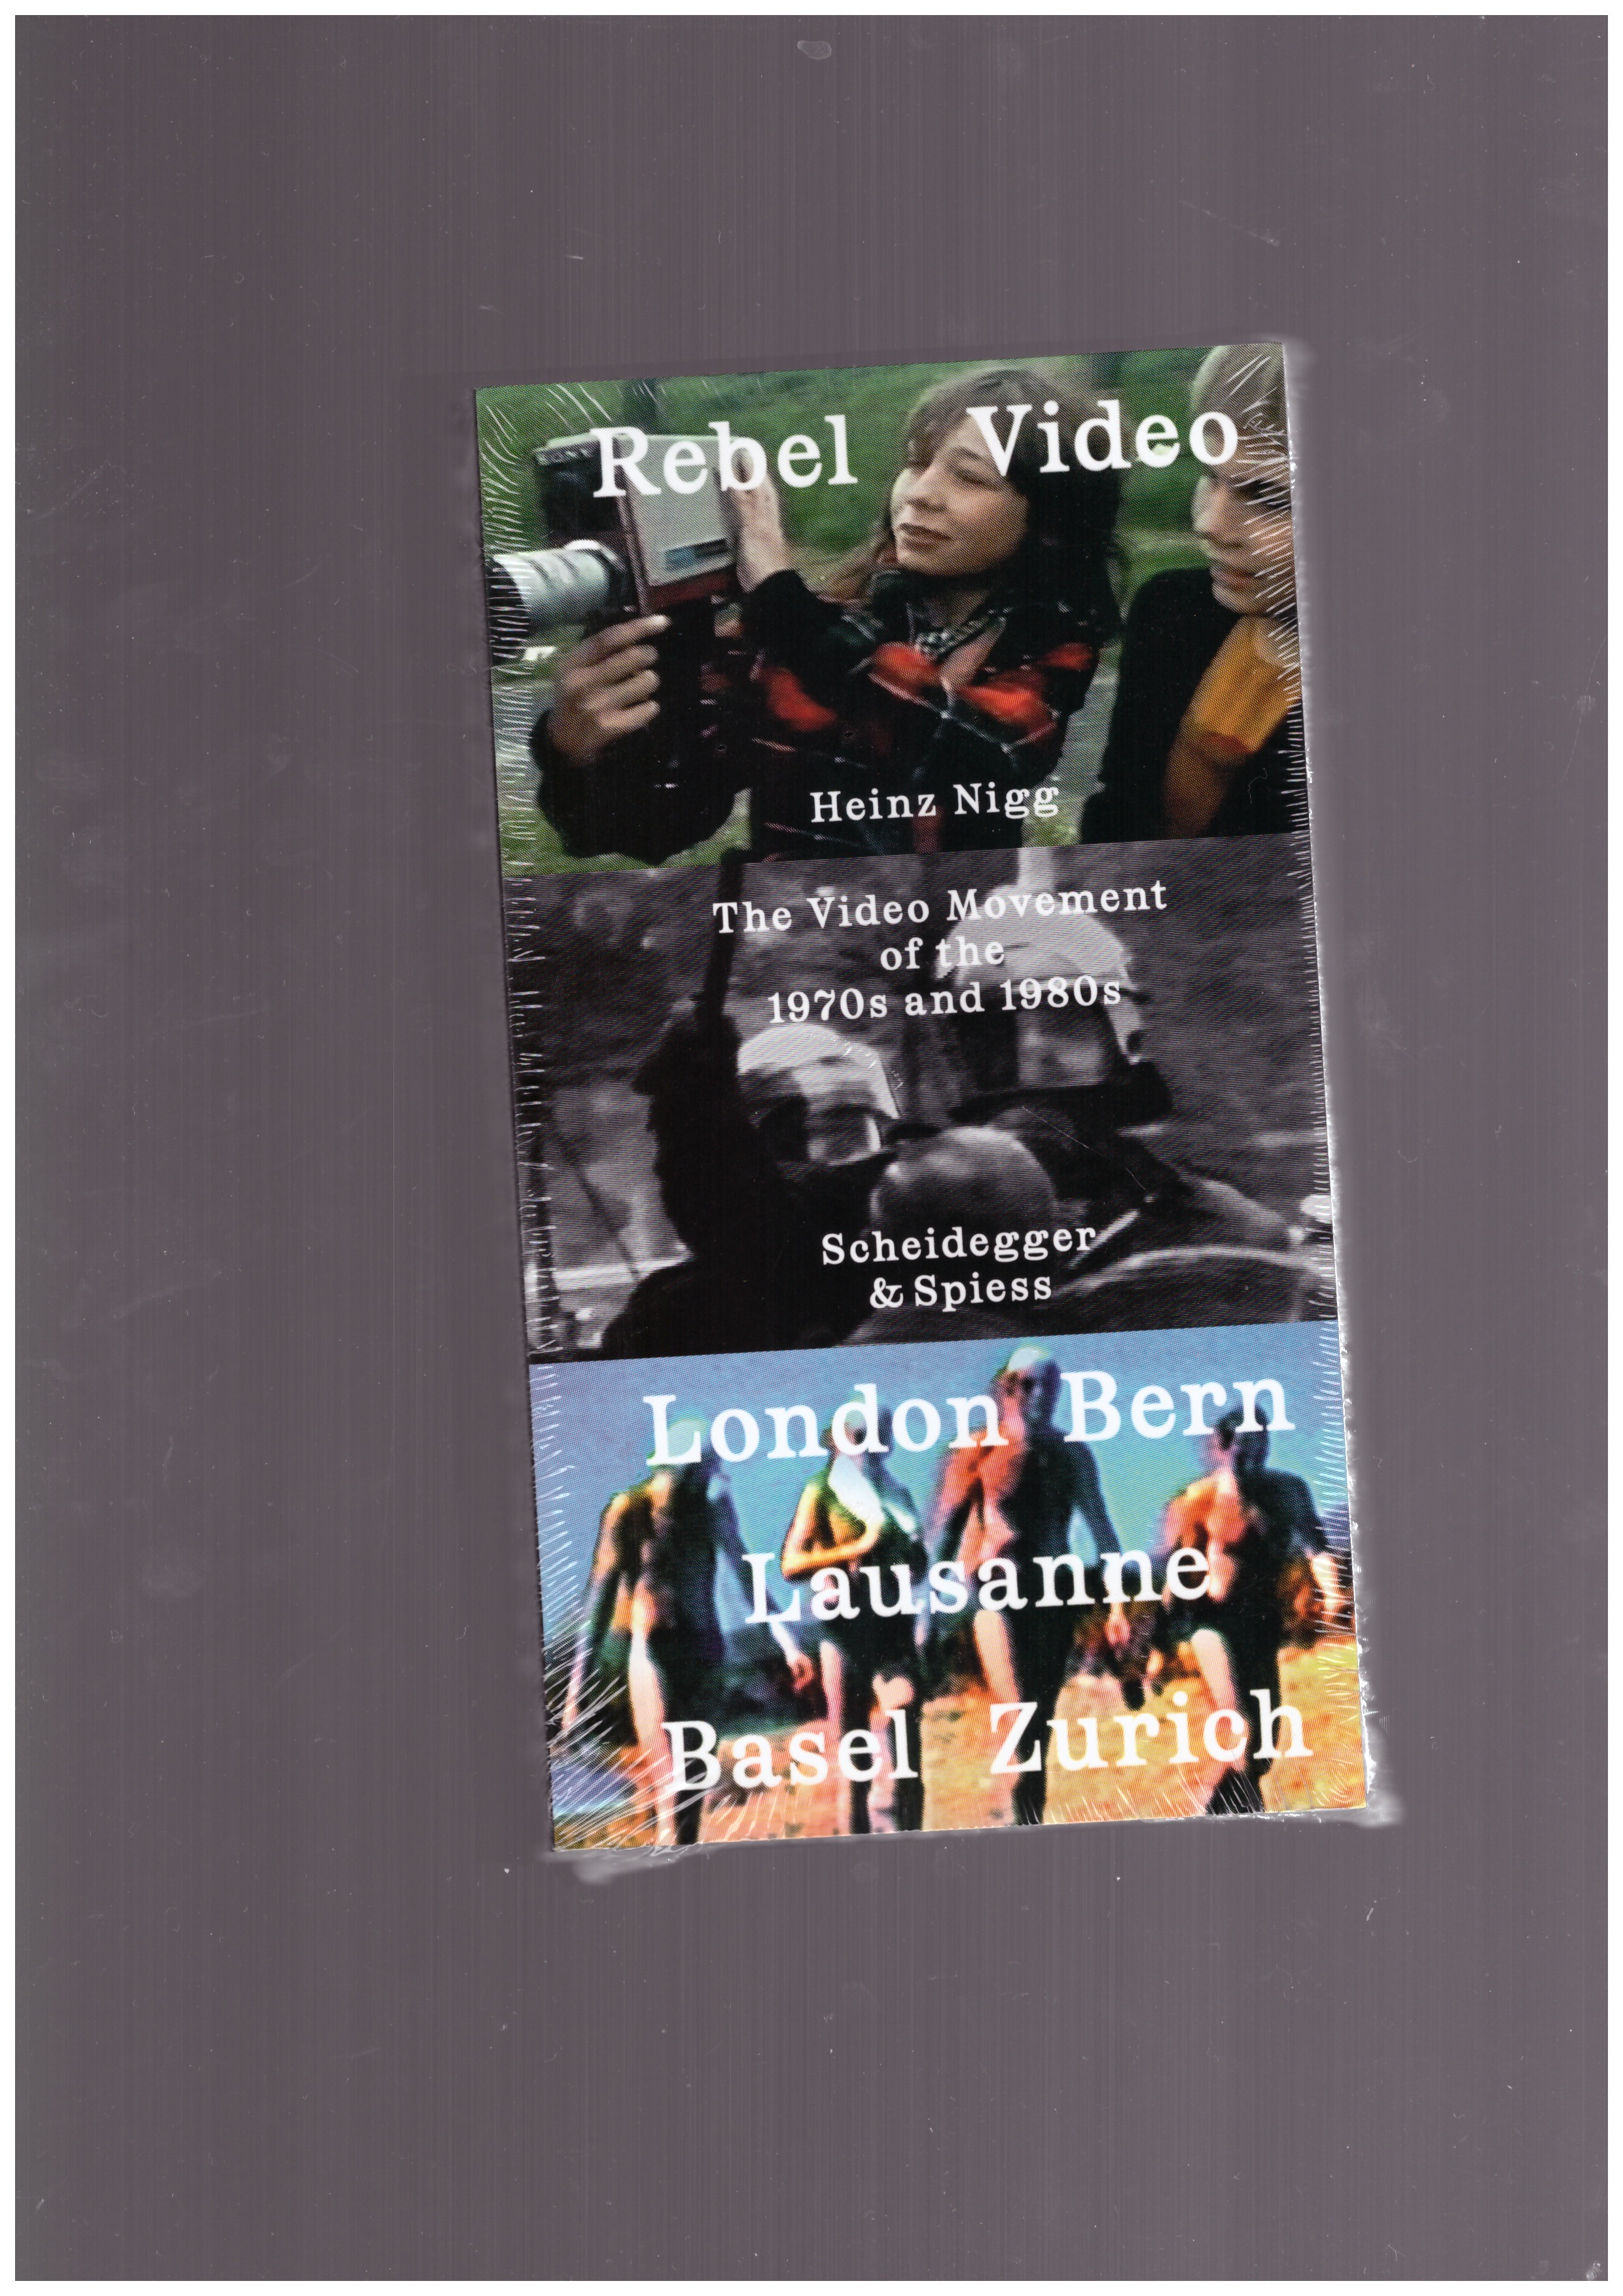 NIGG, Heinz (ed.) - Rebel Video